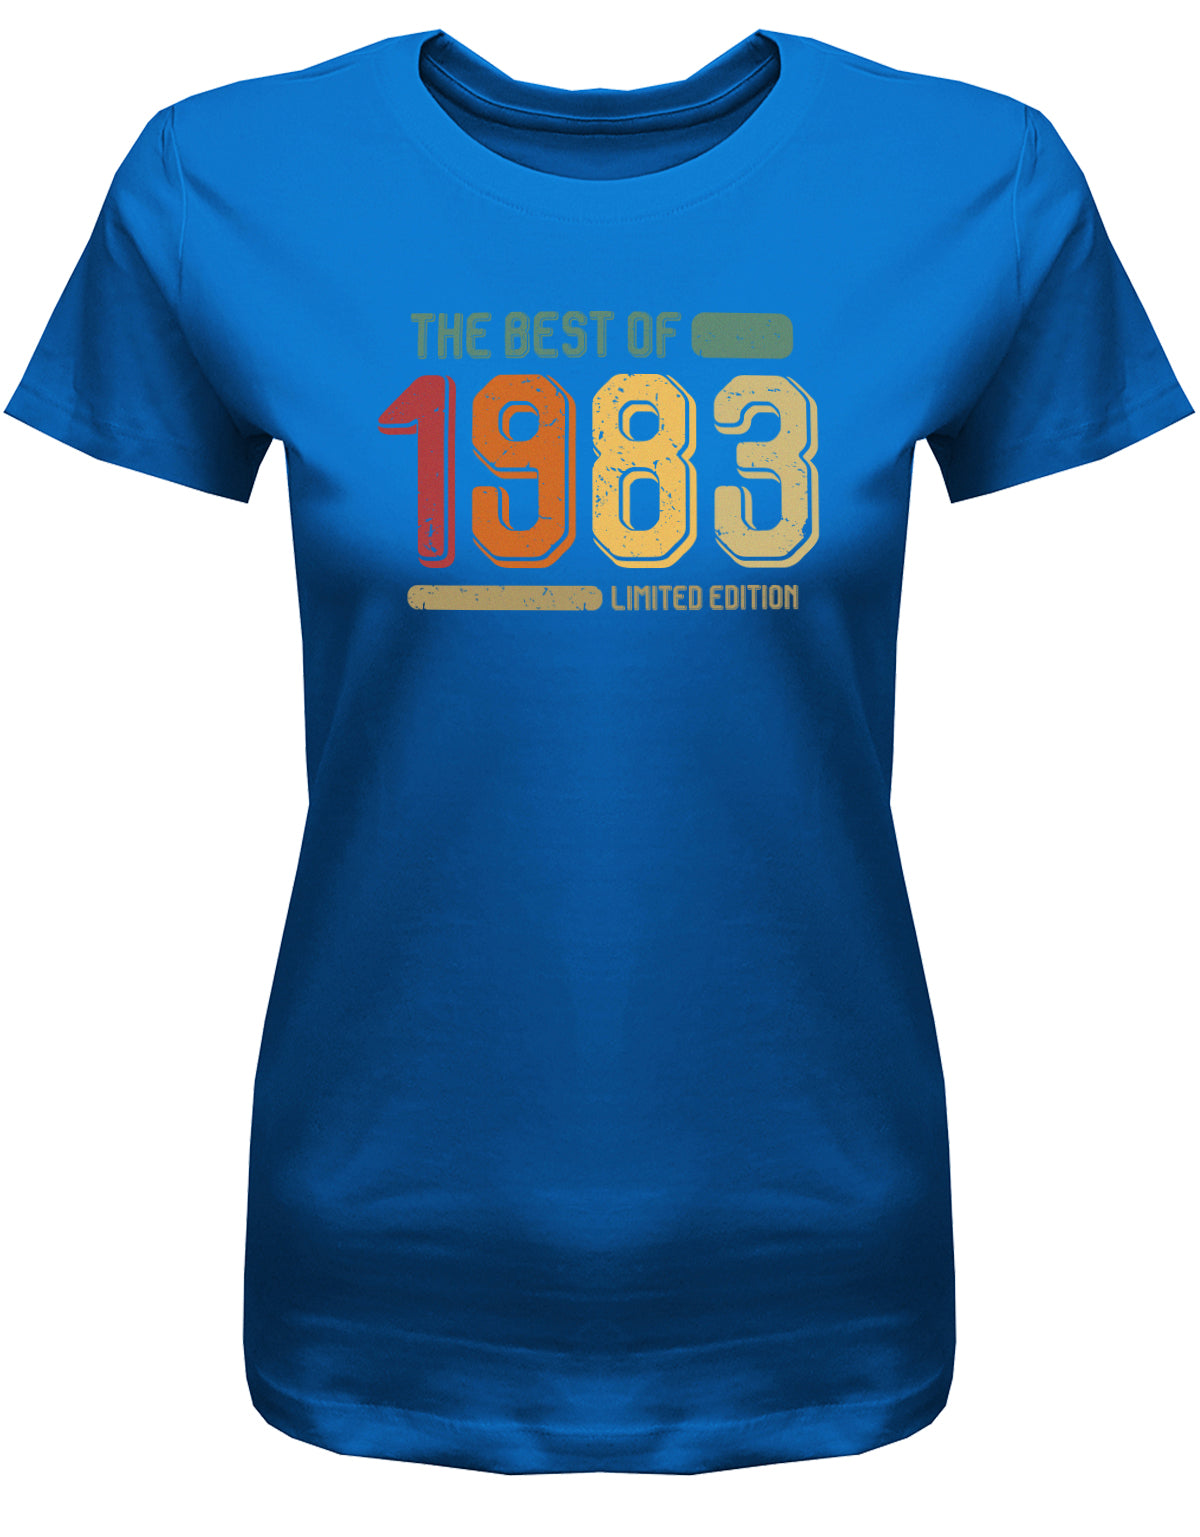 The Best of 1983 Limited Edition Retro Vintage - Jahrgang 1983 Geschenk Frauen Shirt